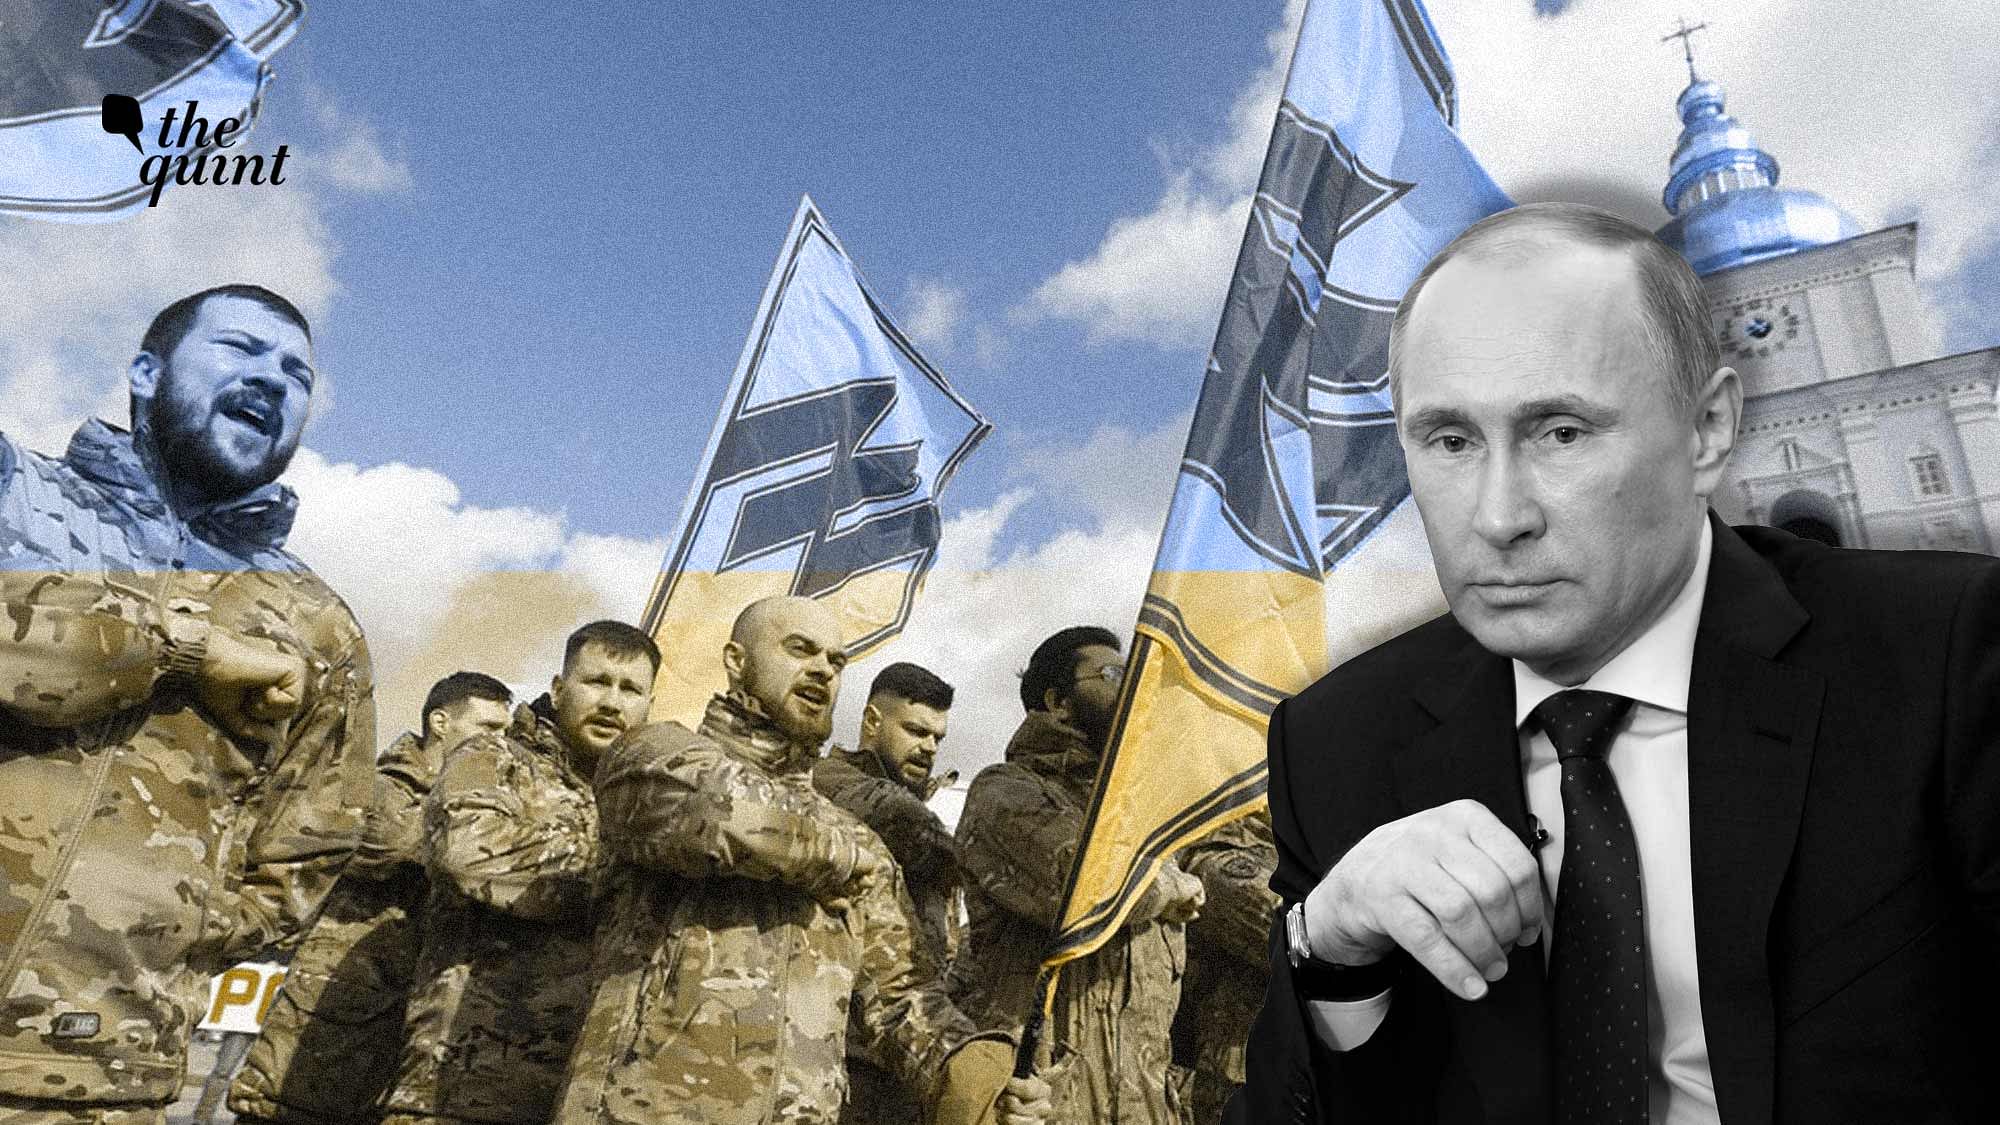 <div class="paragraphs"><p>Putin said he's invading Ukraine to 'denazify' the country.&nbsp;</p></div>